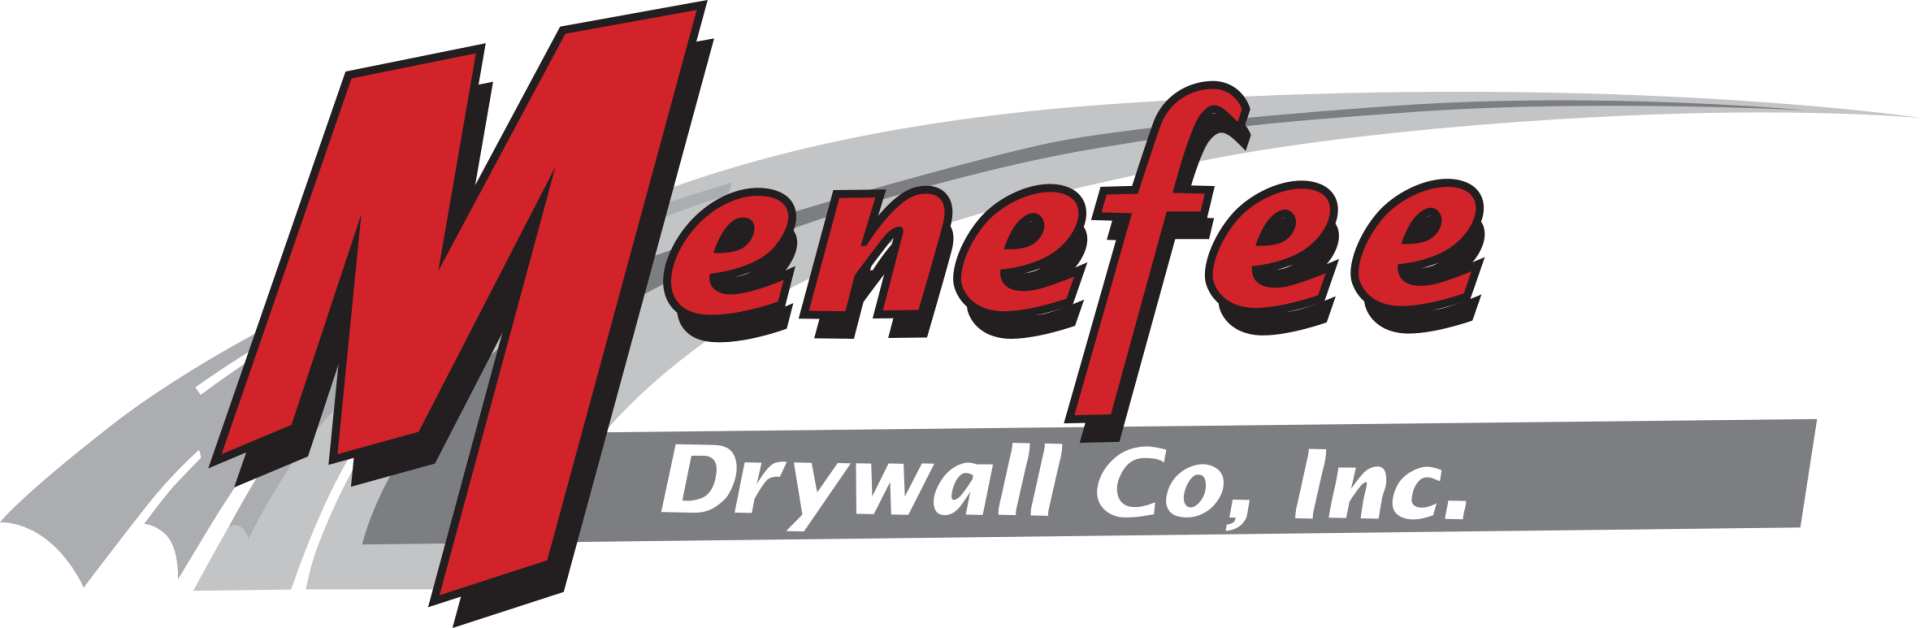 Menefee Drywall Co Inc - Logo